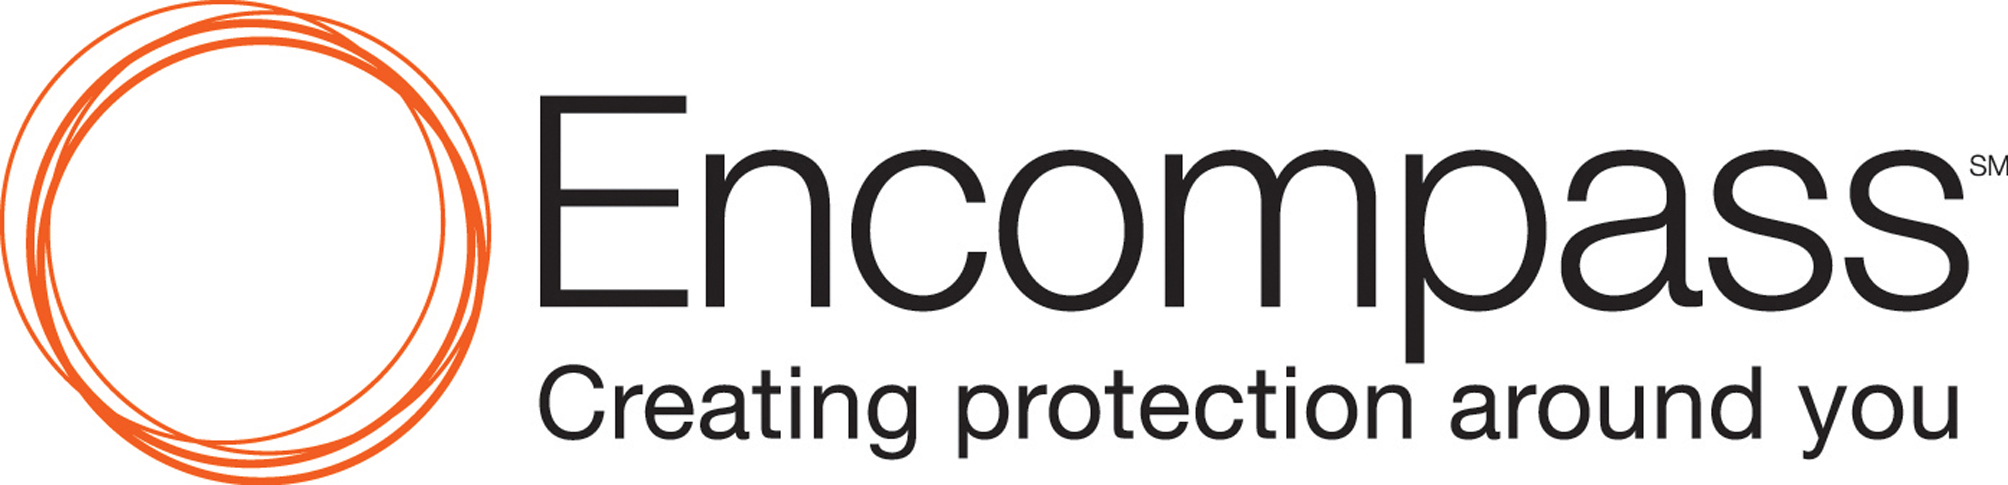 Encompass Insurance Logo photo - 1